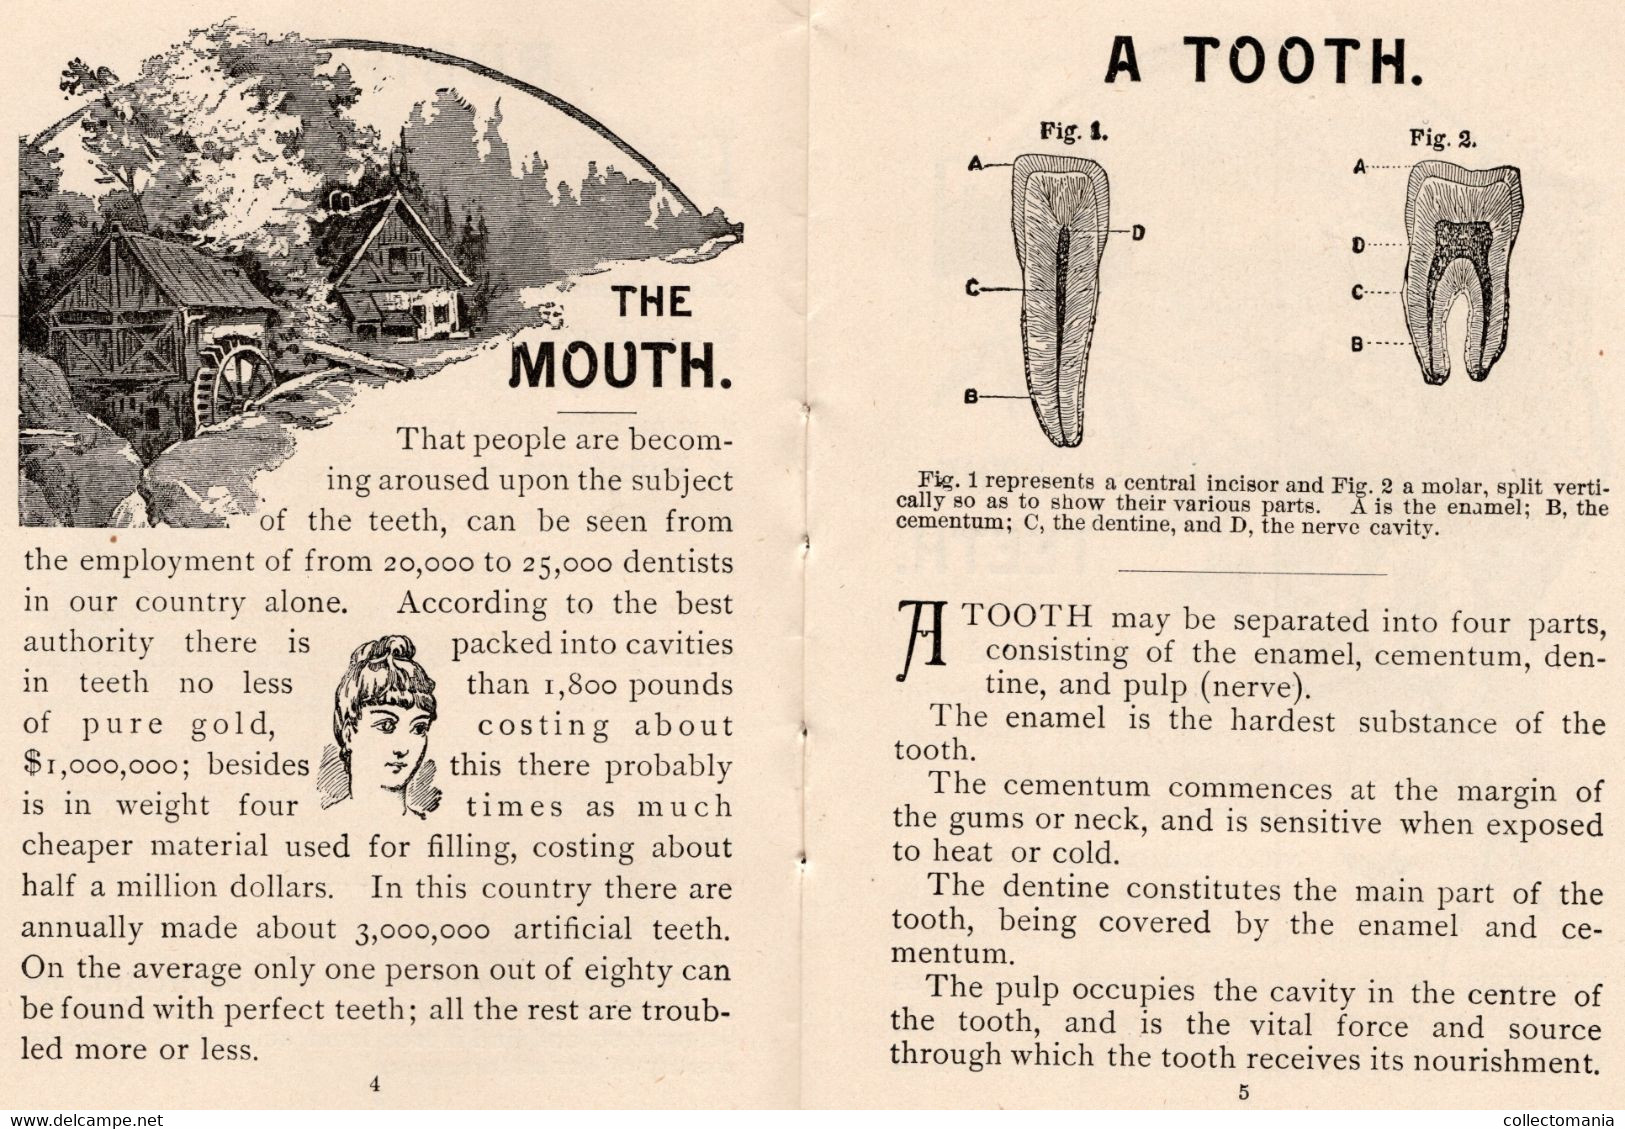 1 Carnet Booklet  The Teeth  E.W.Hoyt  & C° 1891 Rubifoam Tooth Powder Dentist Dentifrice - Antiquariat (bis 1960)